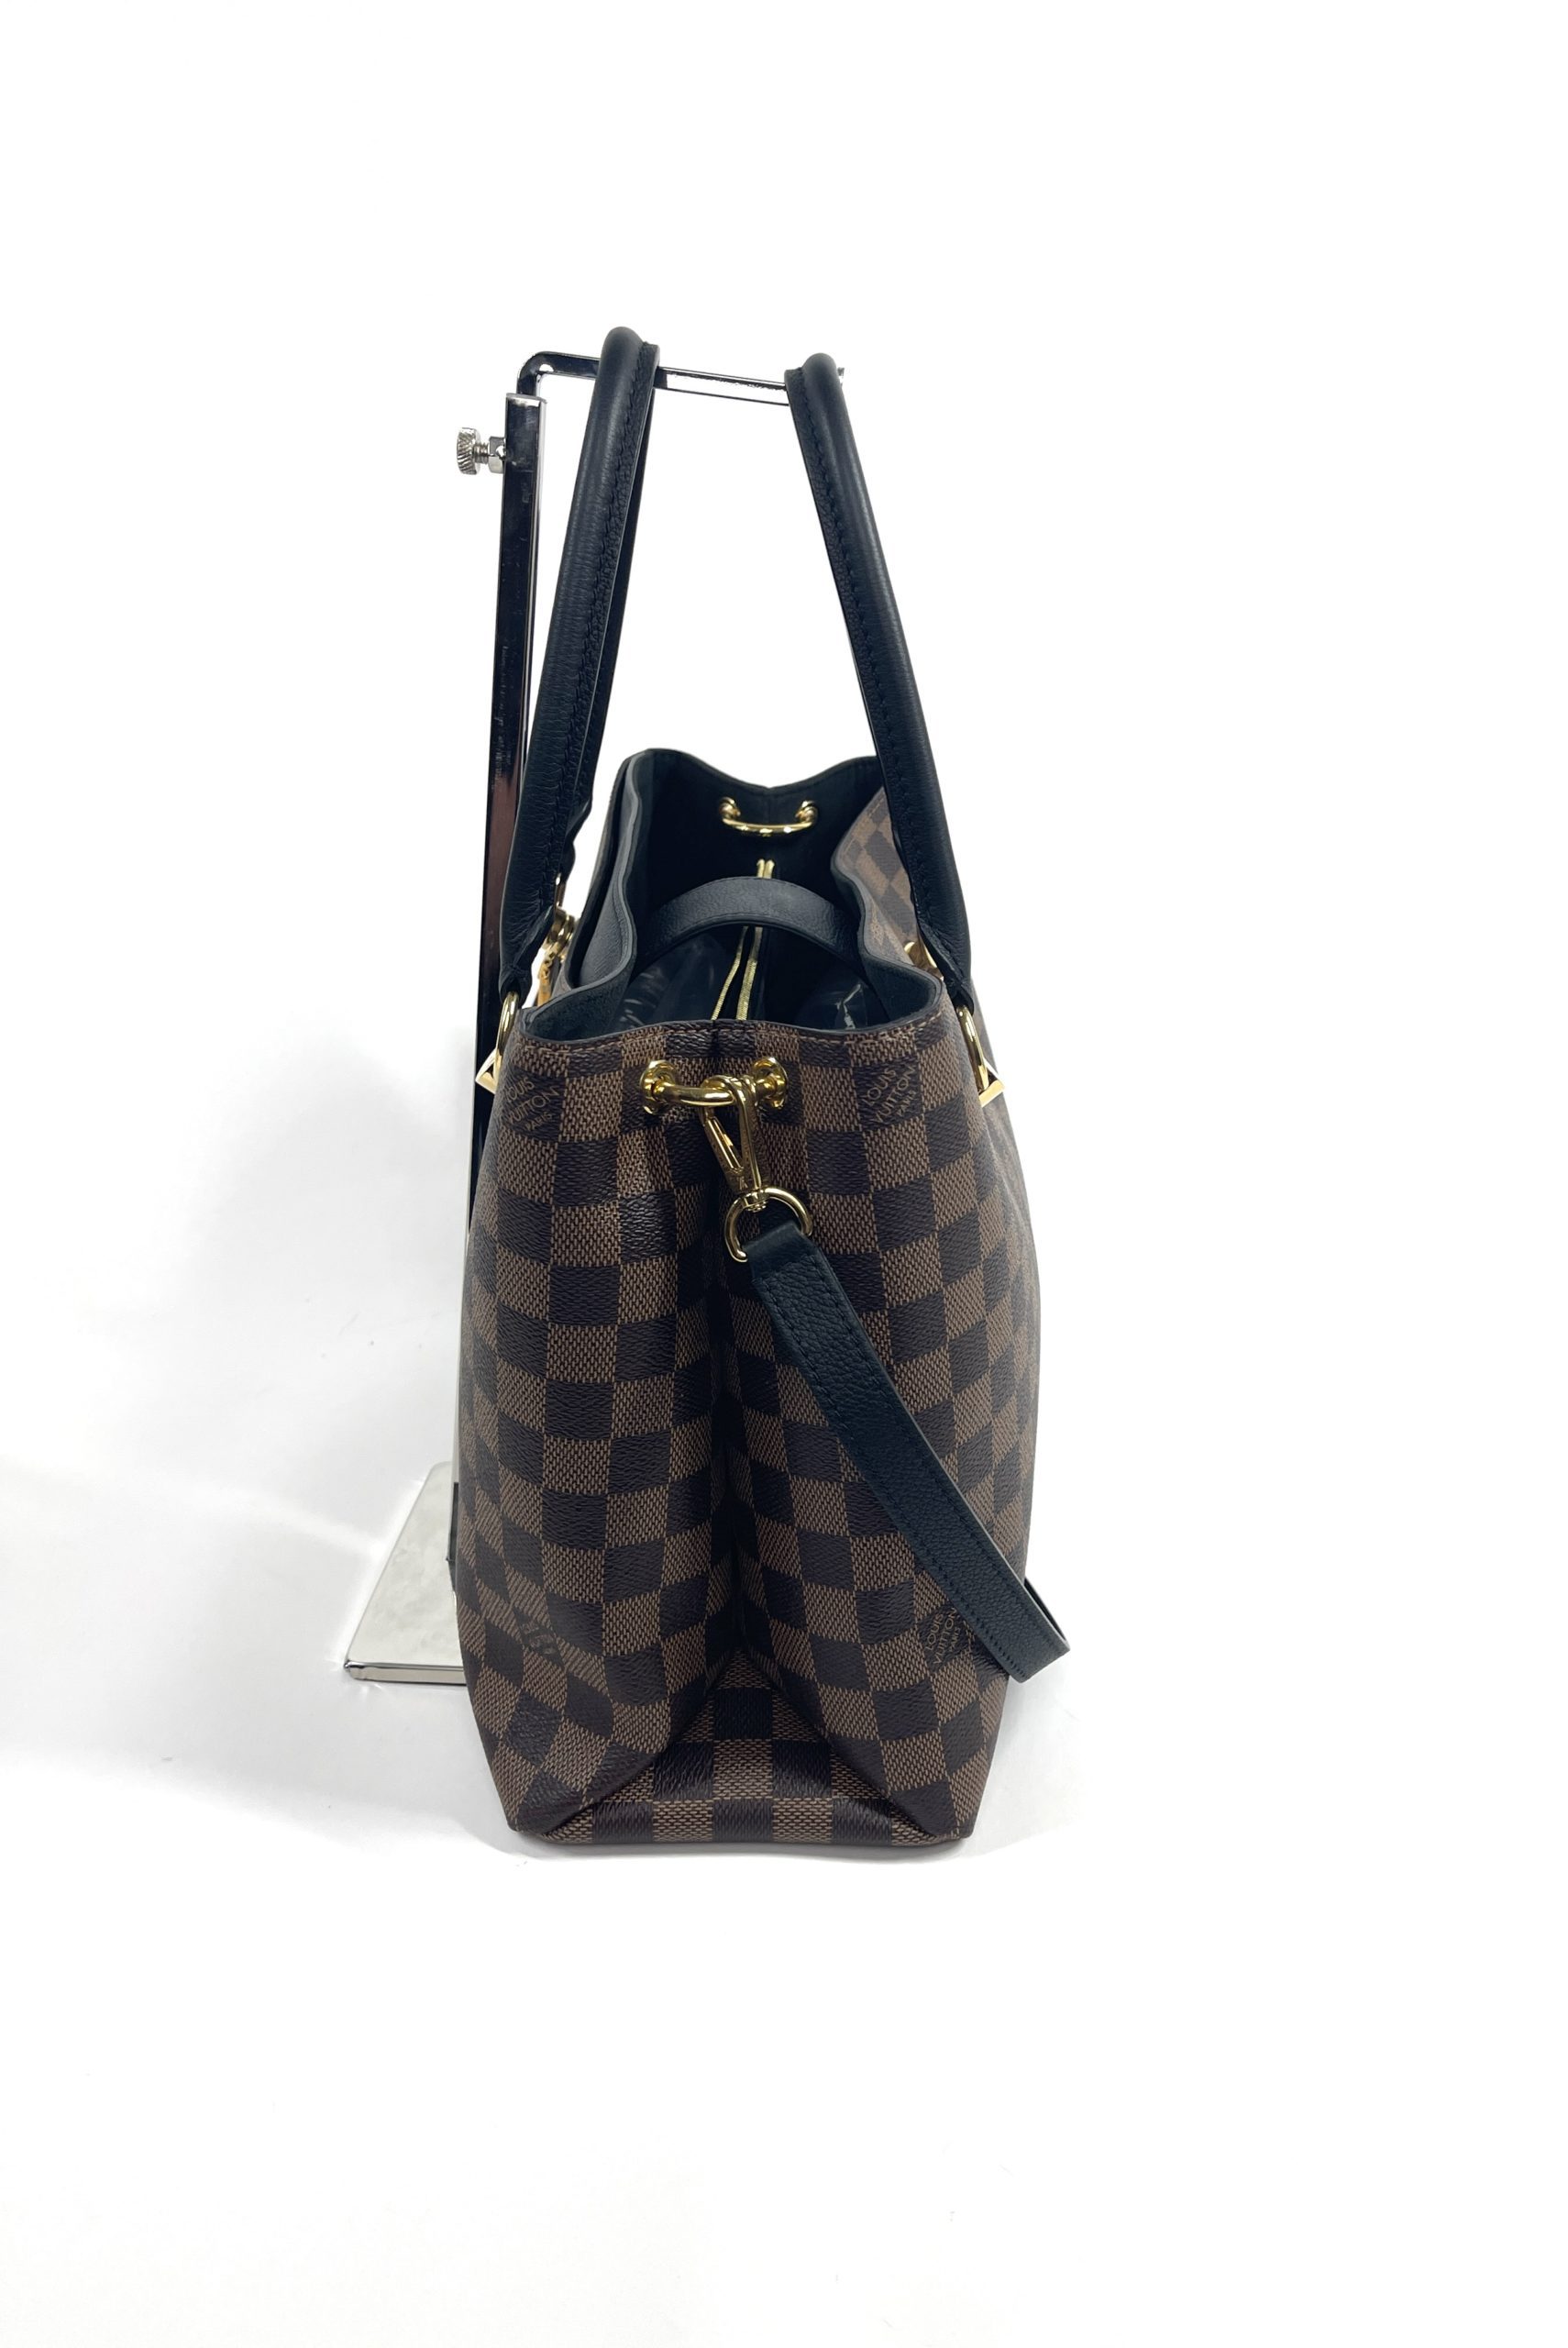 Louis Vuitton Neverfull MM Damier Ebene Tote Shoulder Bag Box Dust Bag  Receipt